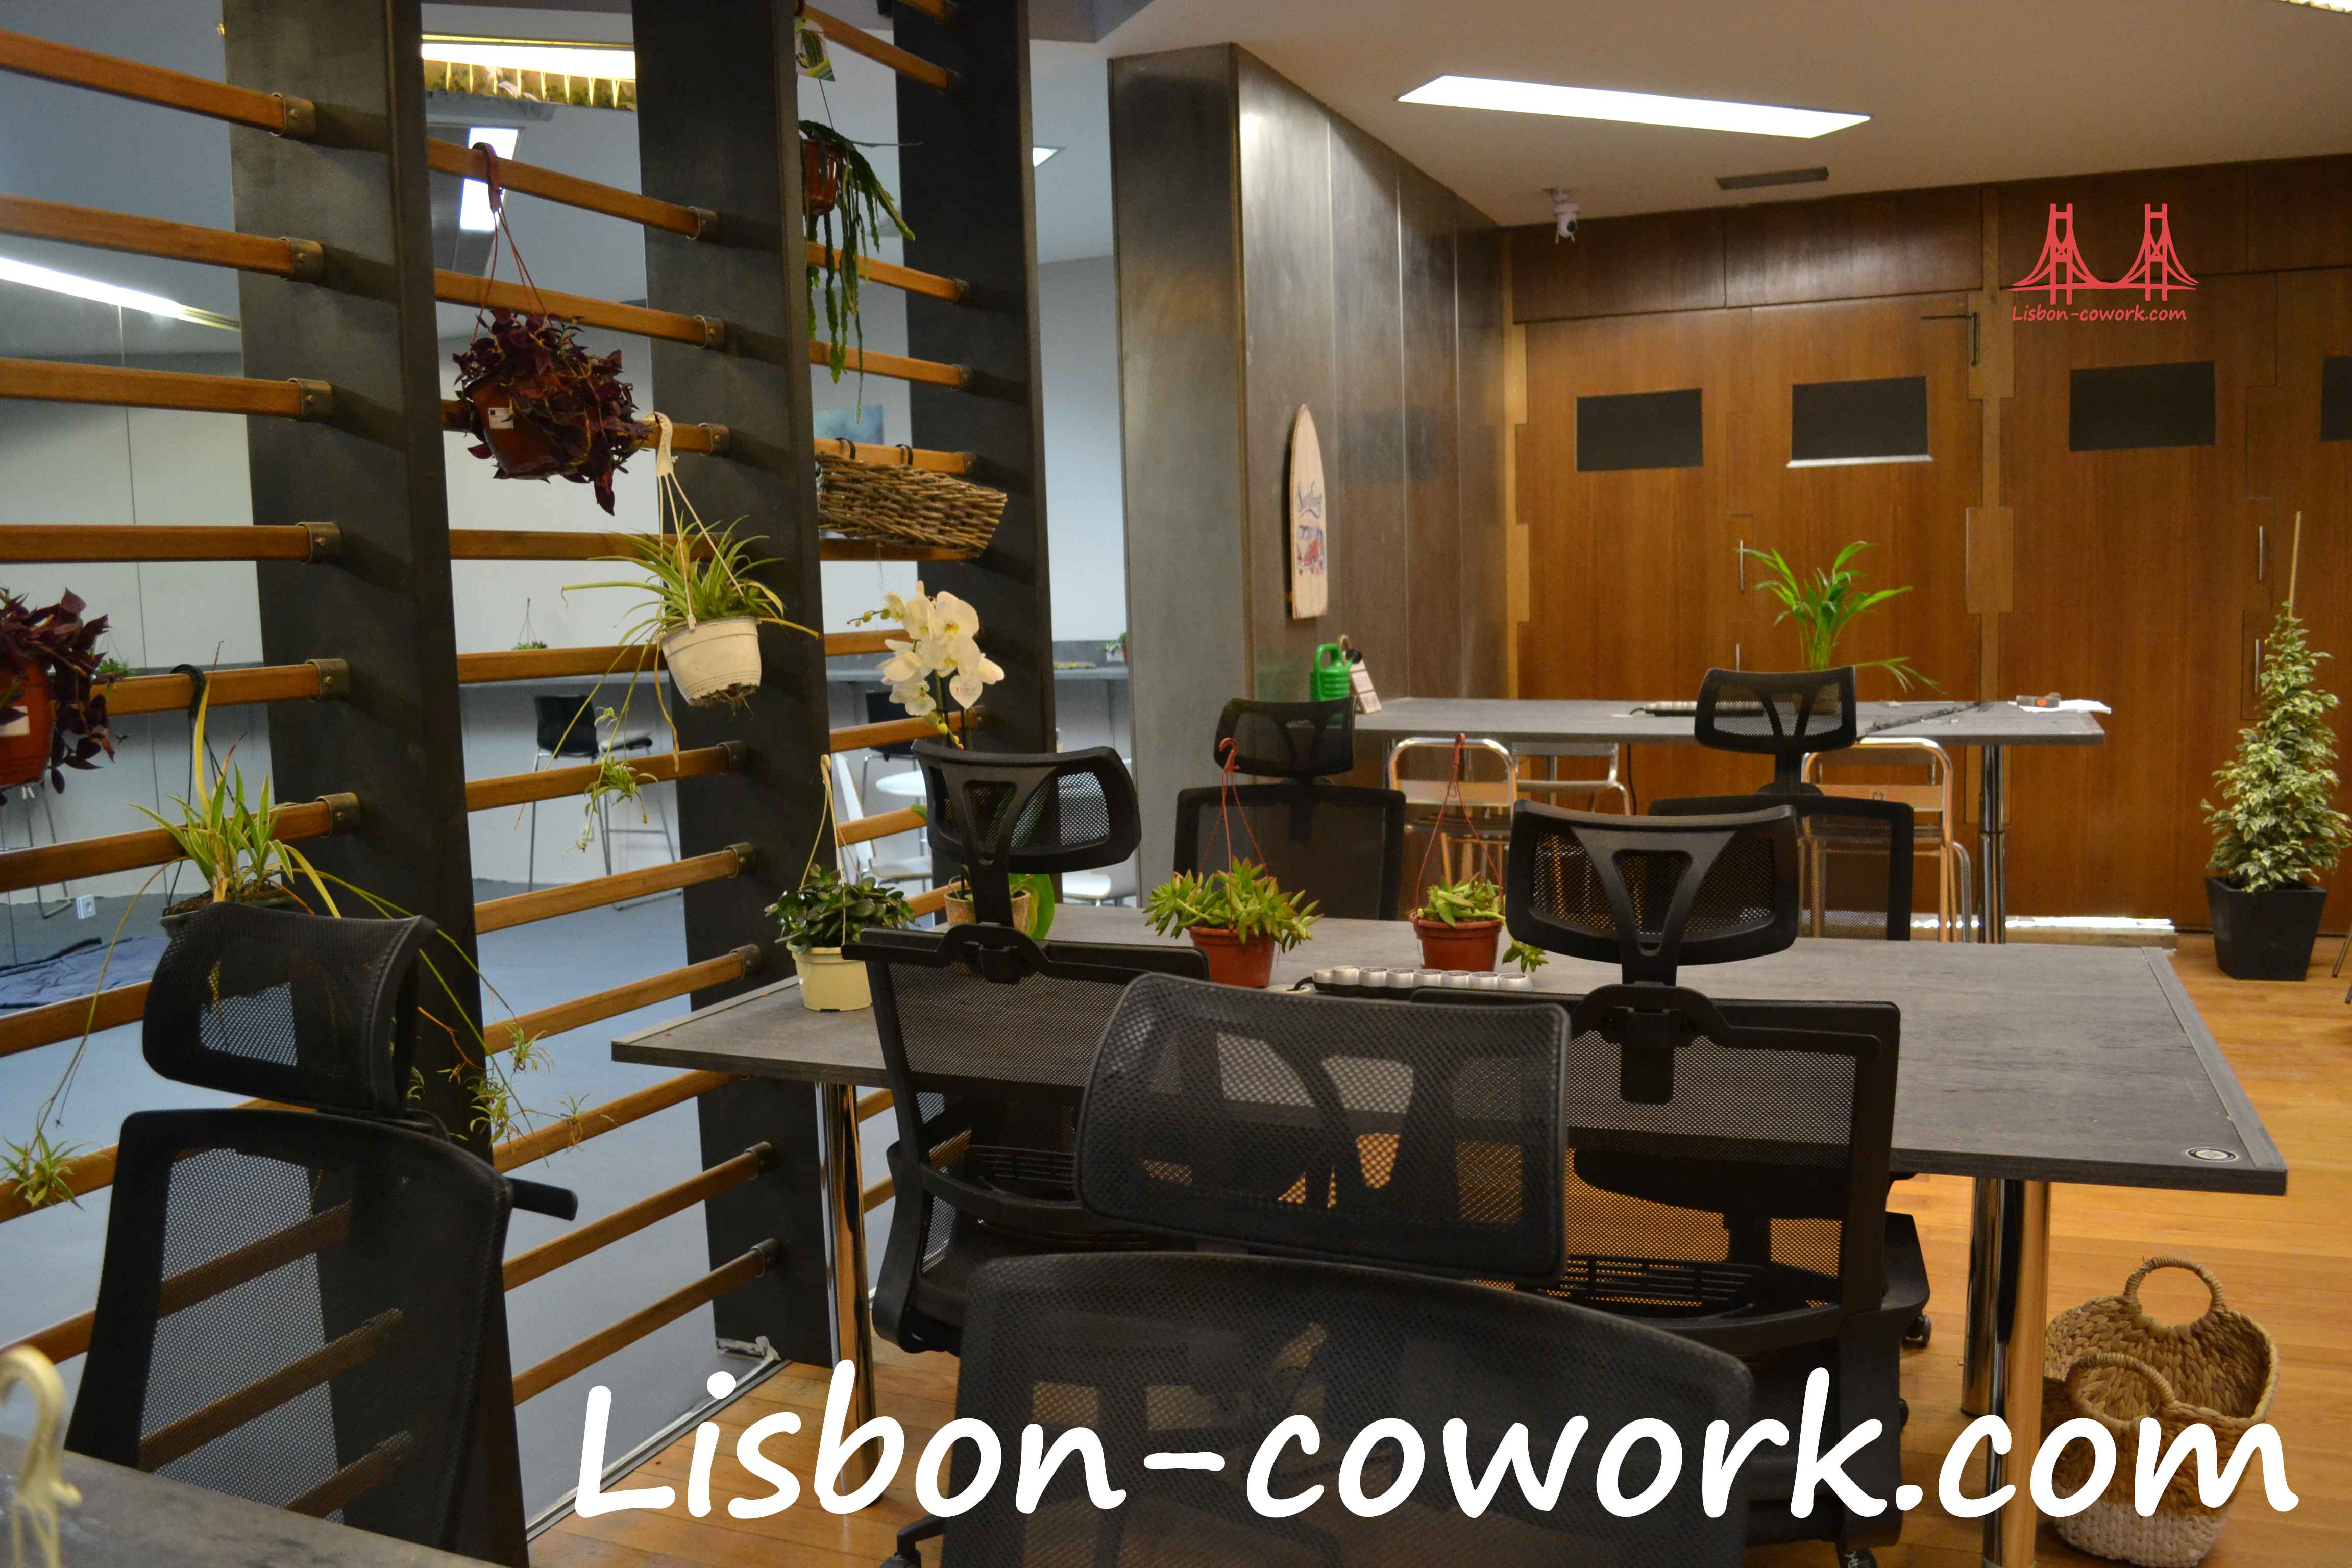 Lisbon-cowork.com cover image